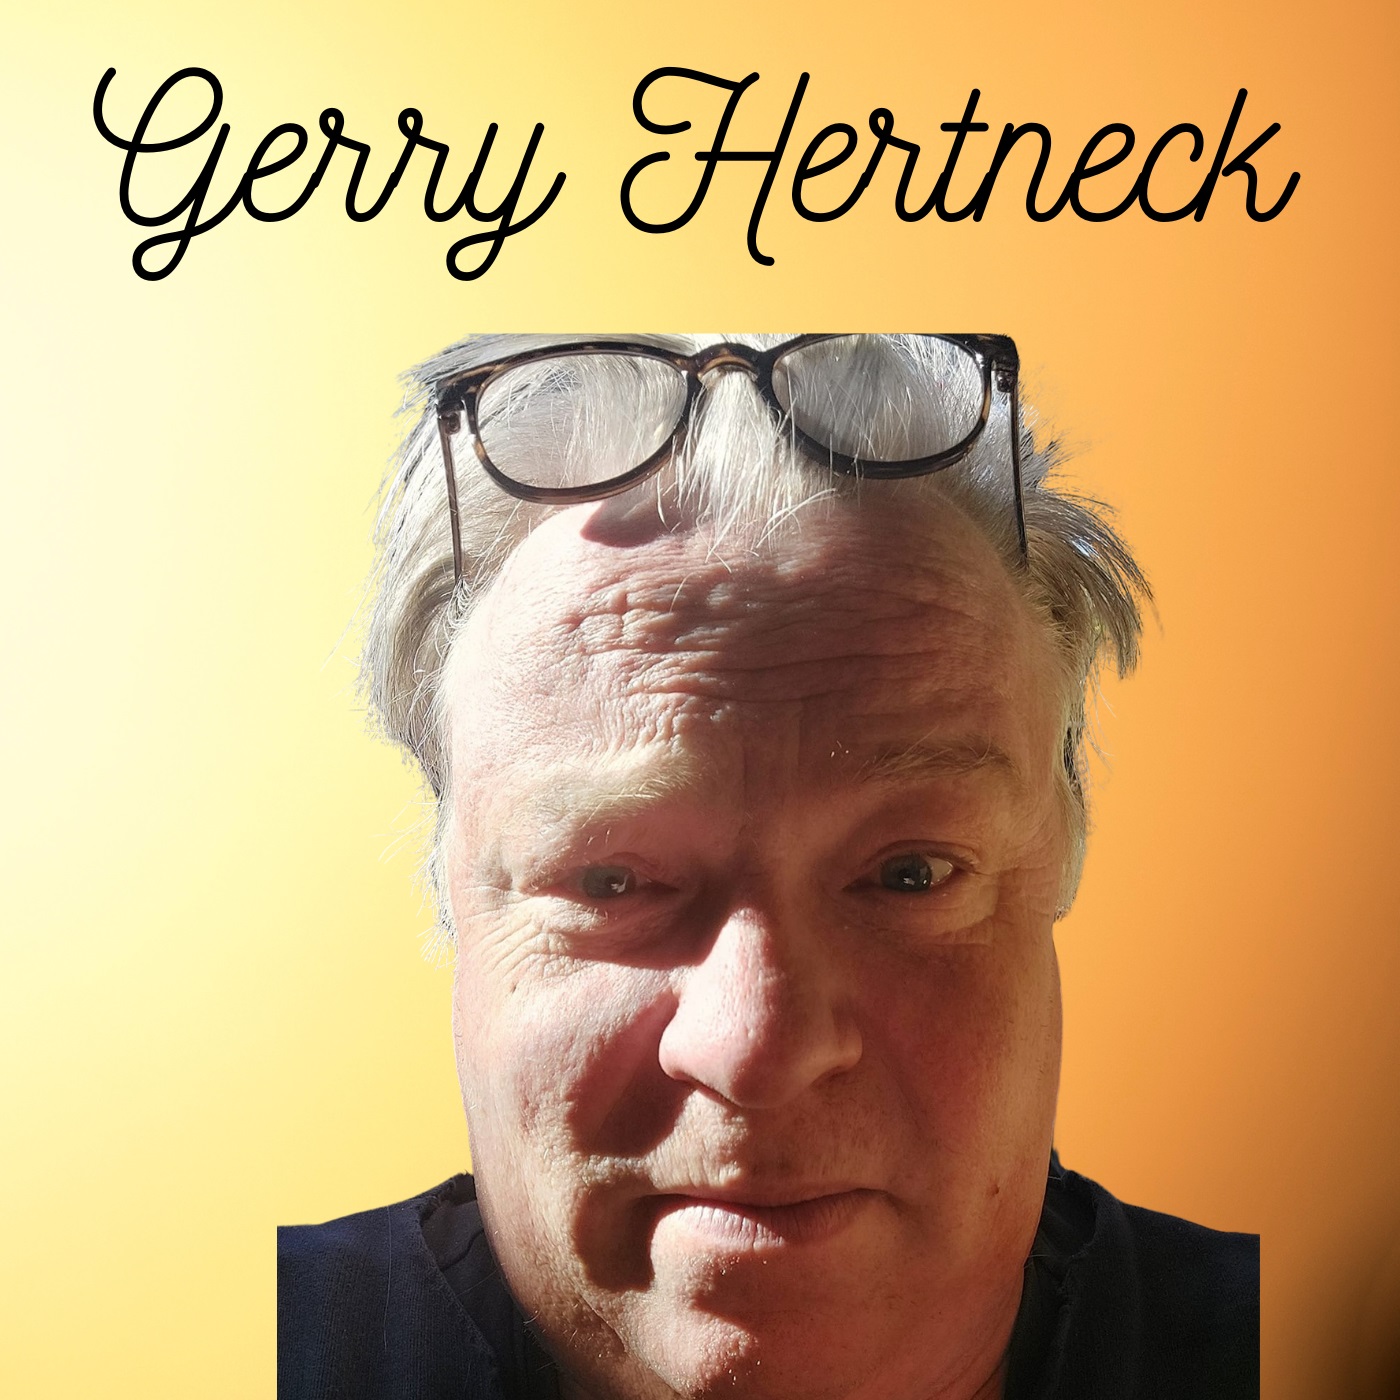 Gerry Hertneck